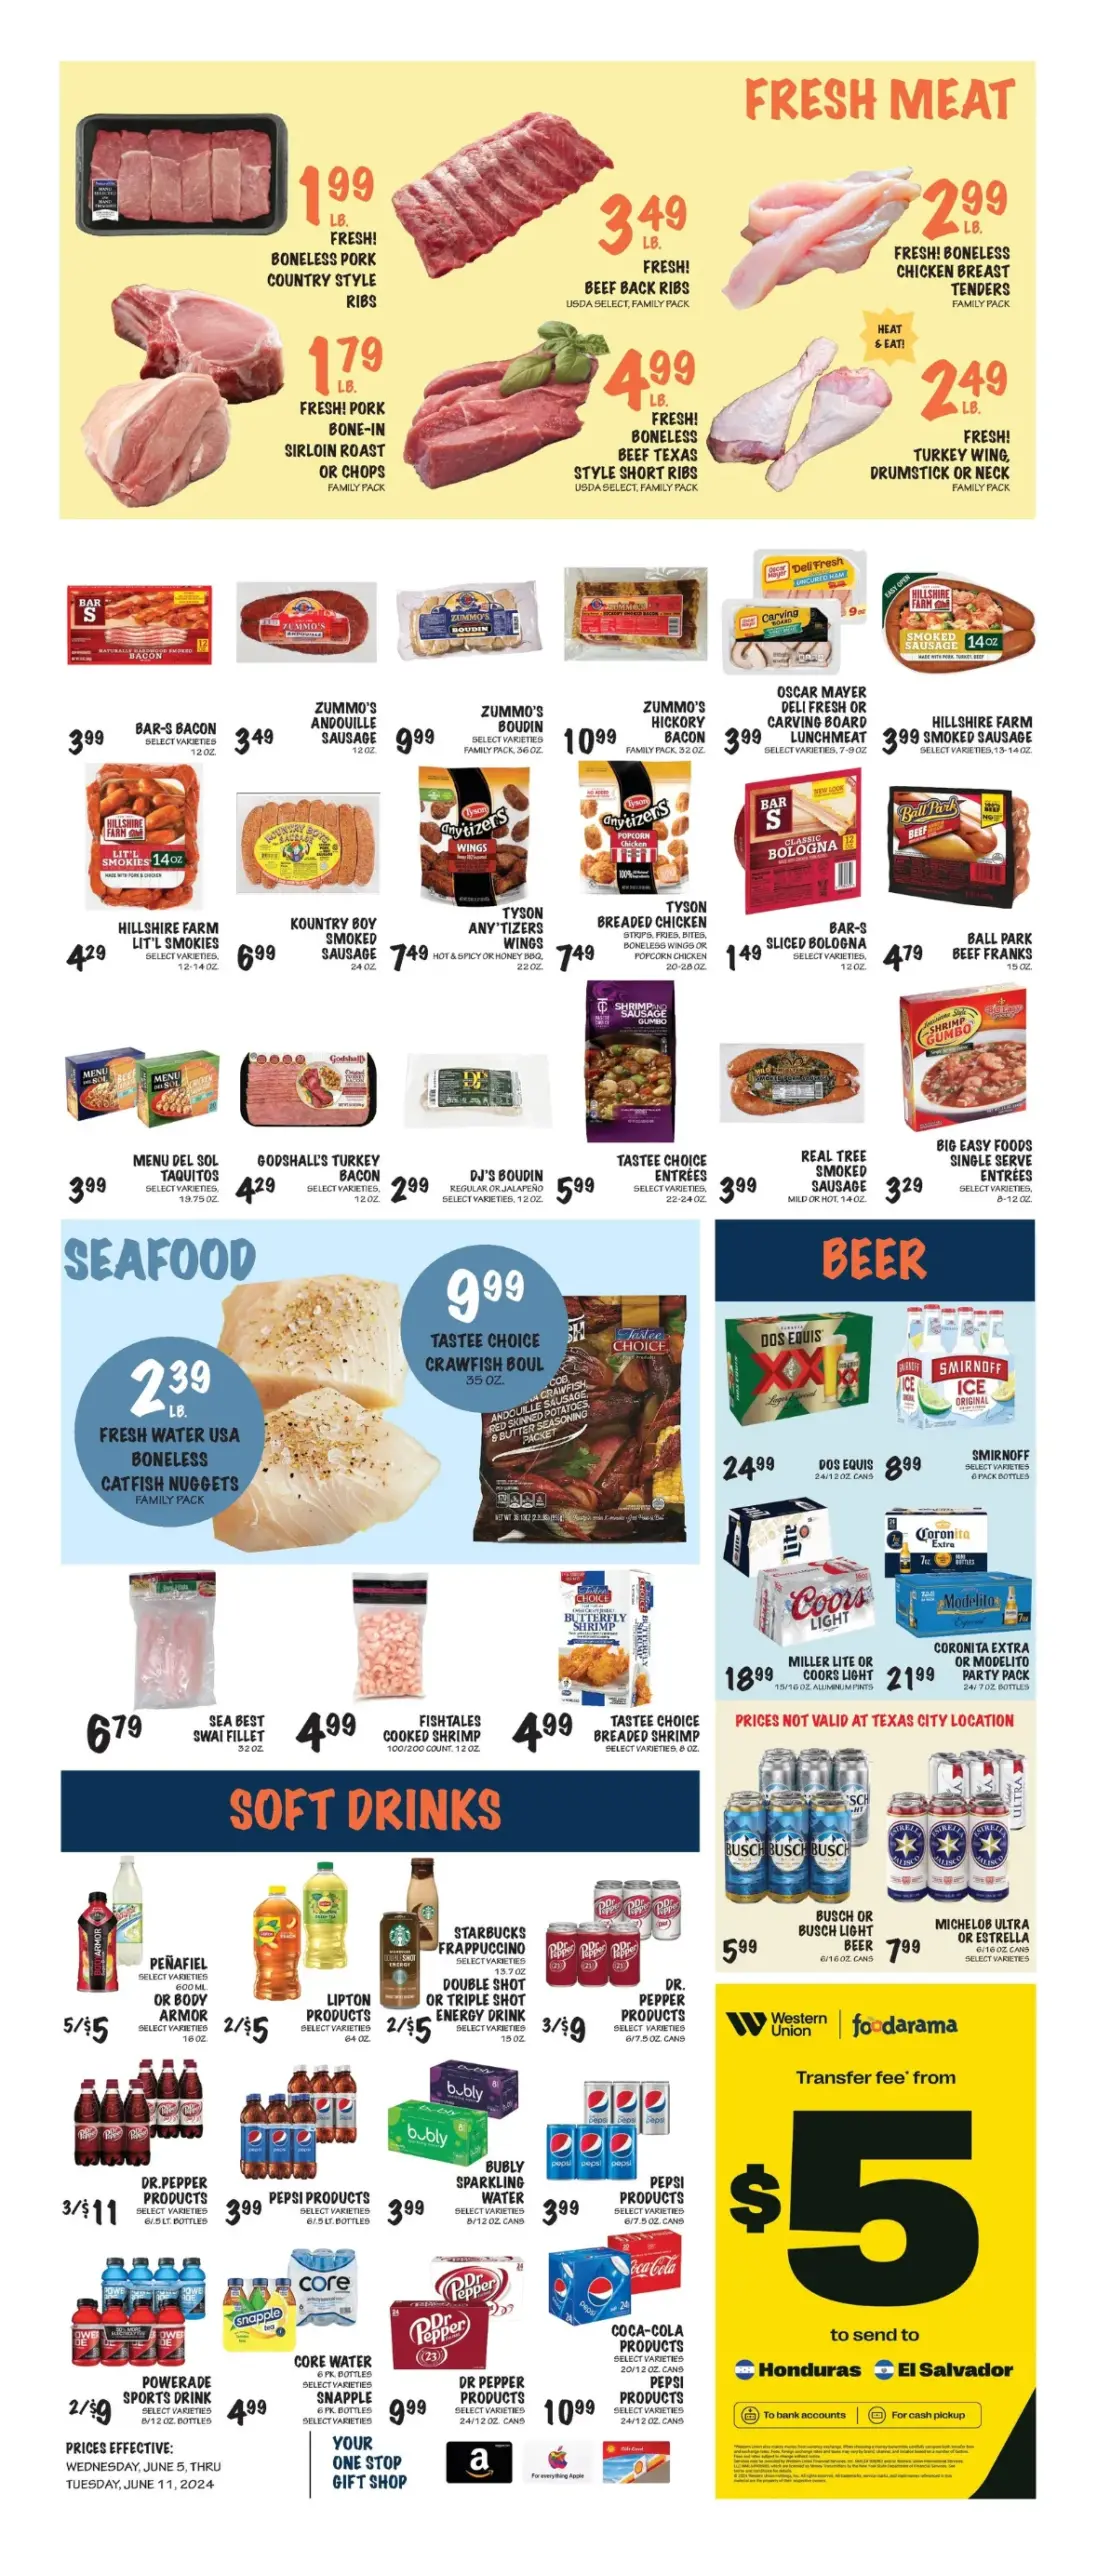 Foodarama July 2024 Weekly Sales, Deals, Discounts and Digital Coupons.